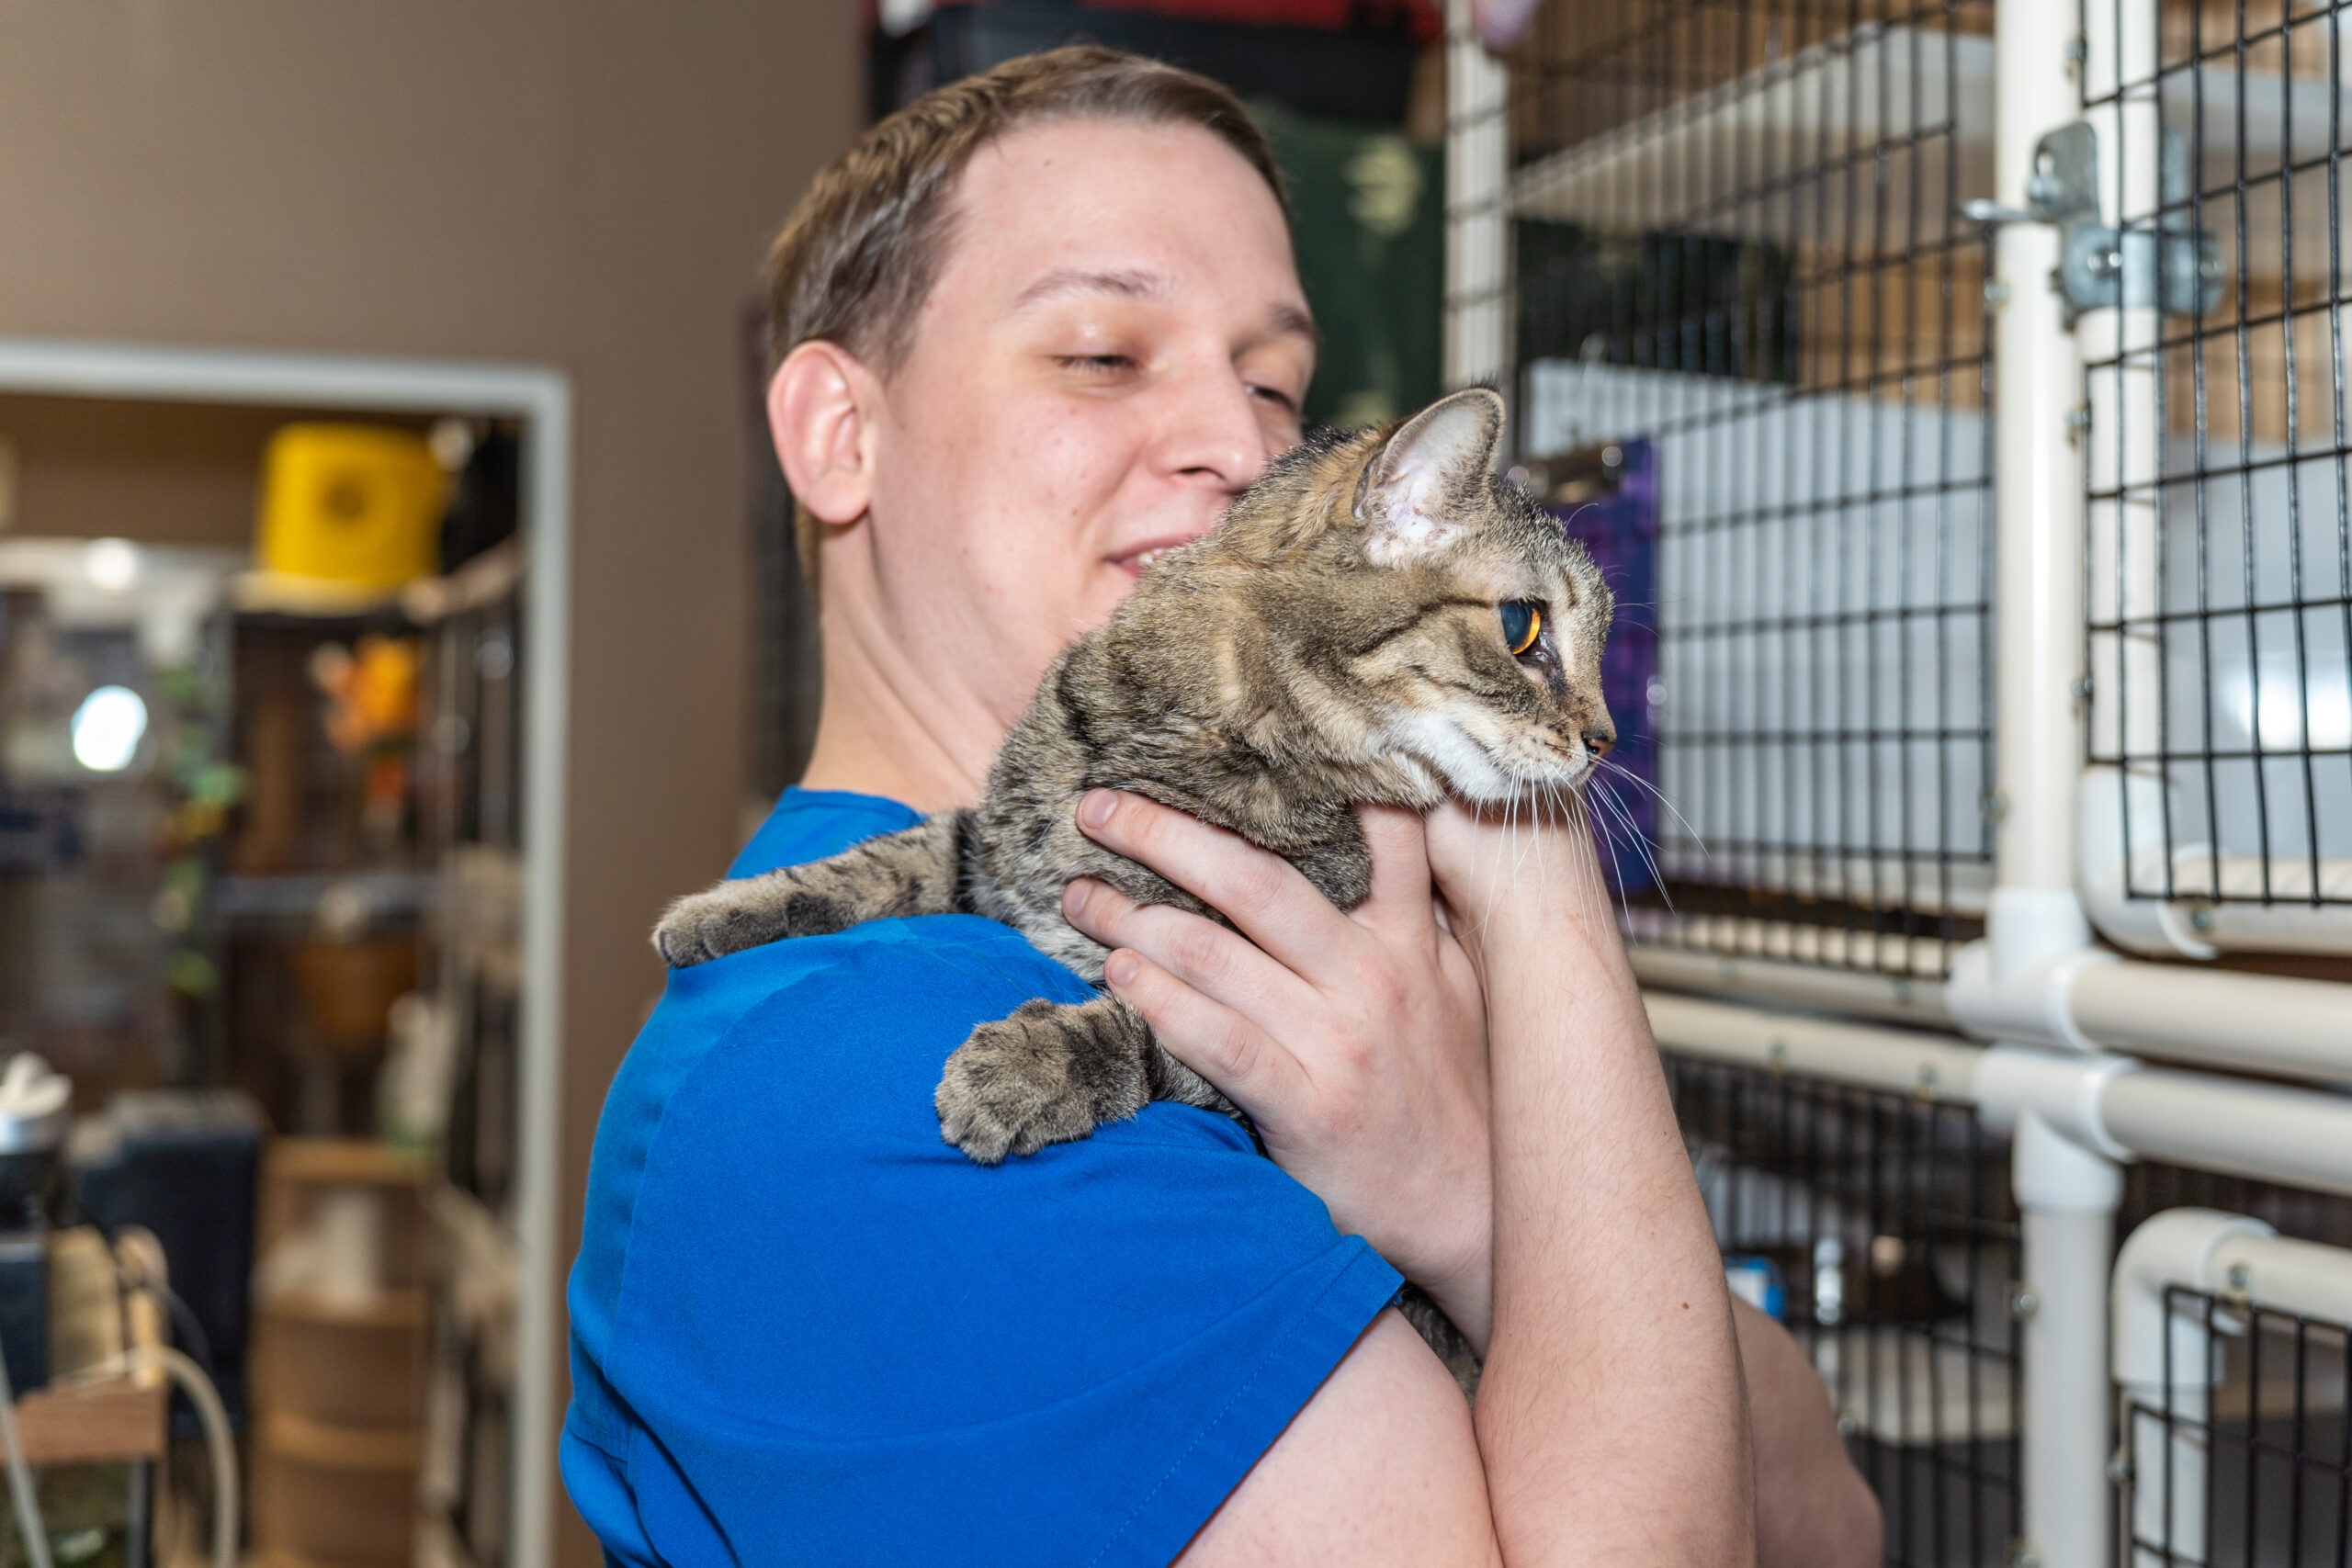 a vet holding a cat